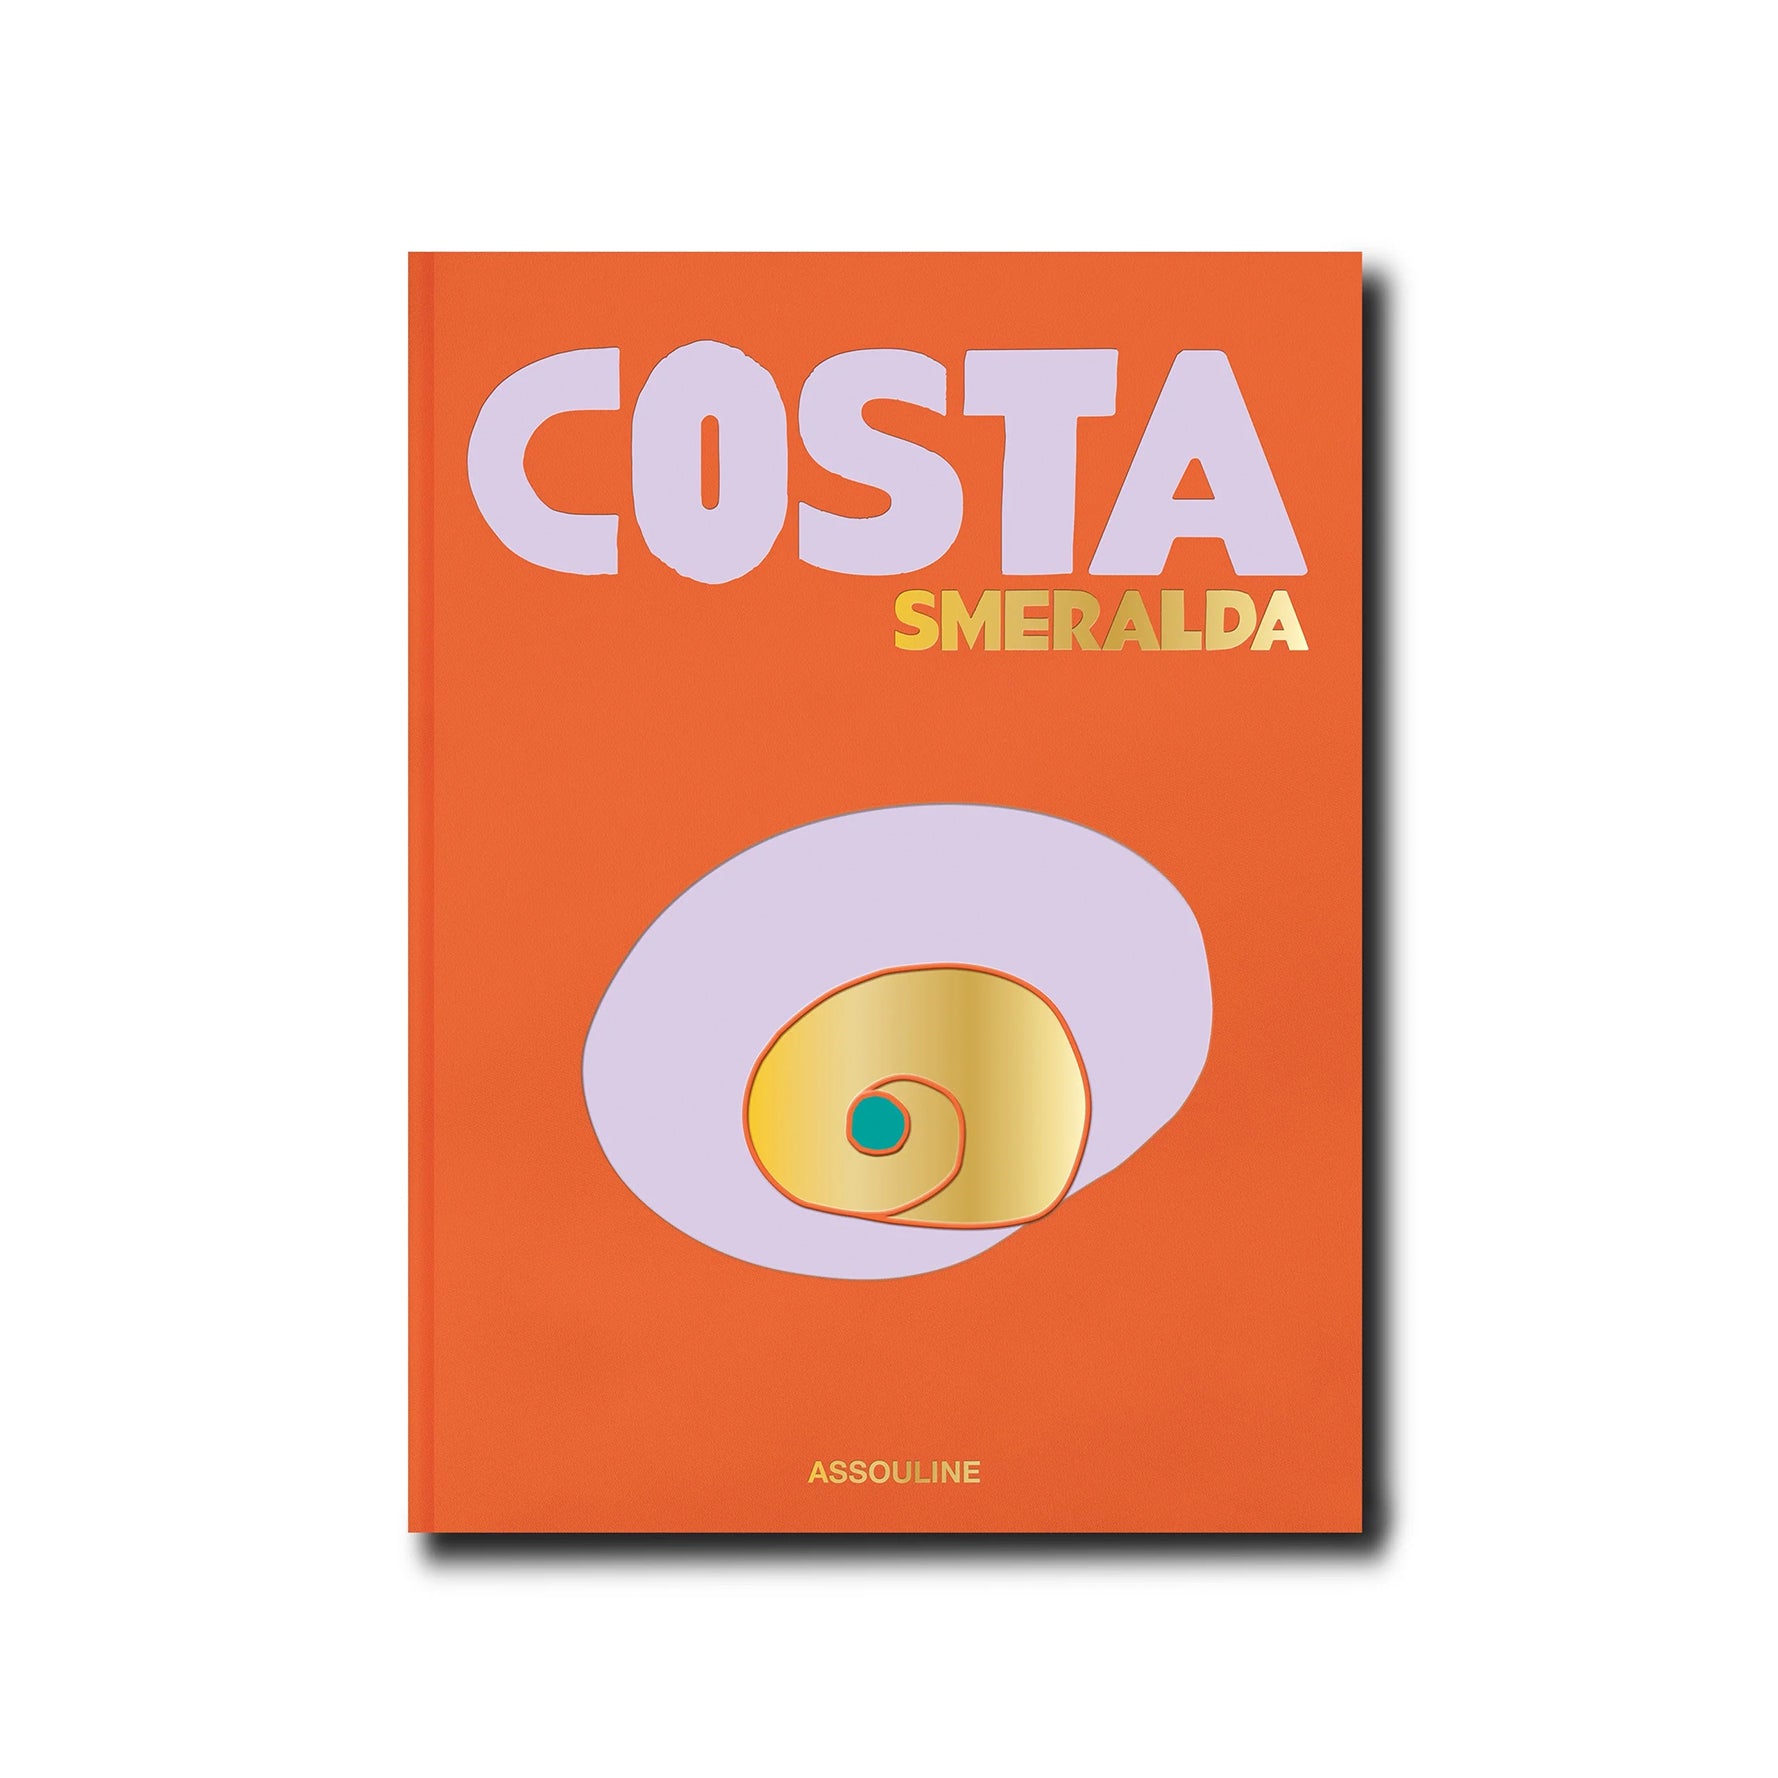 Costa Smeralda by Assouline